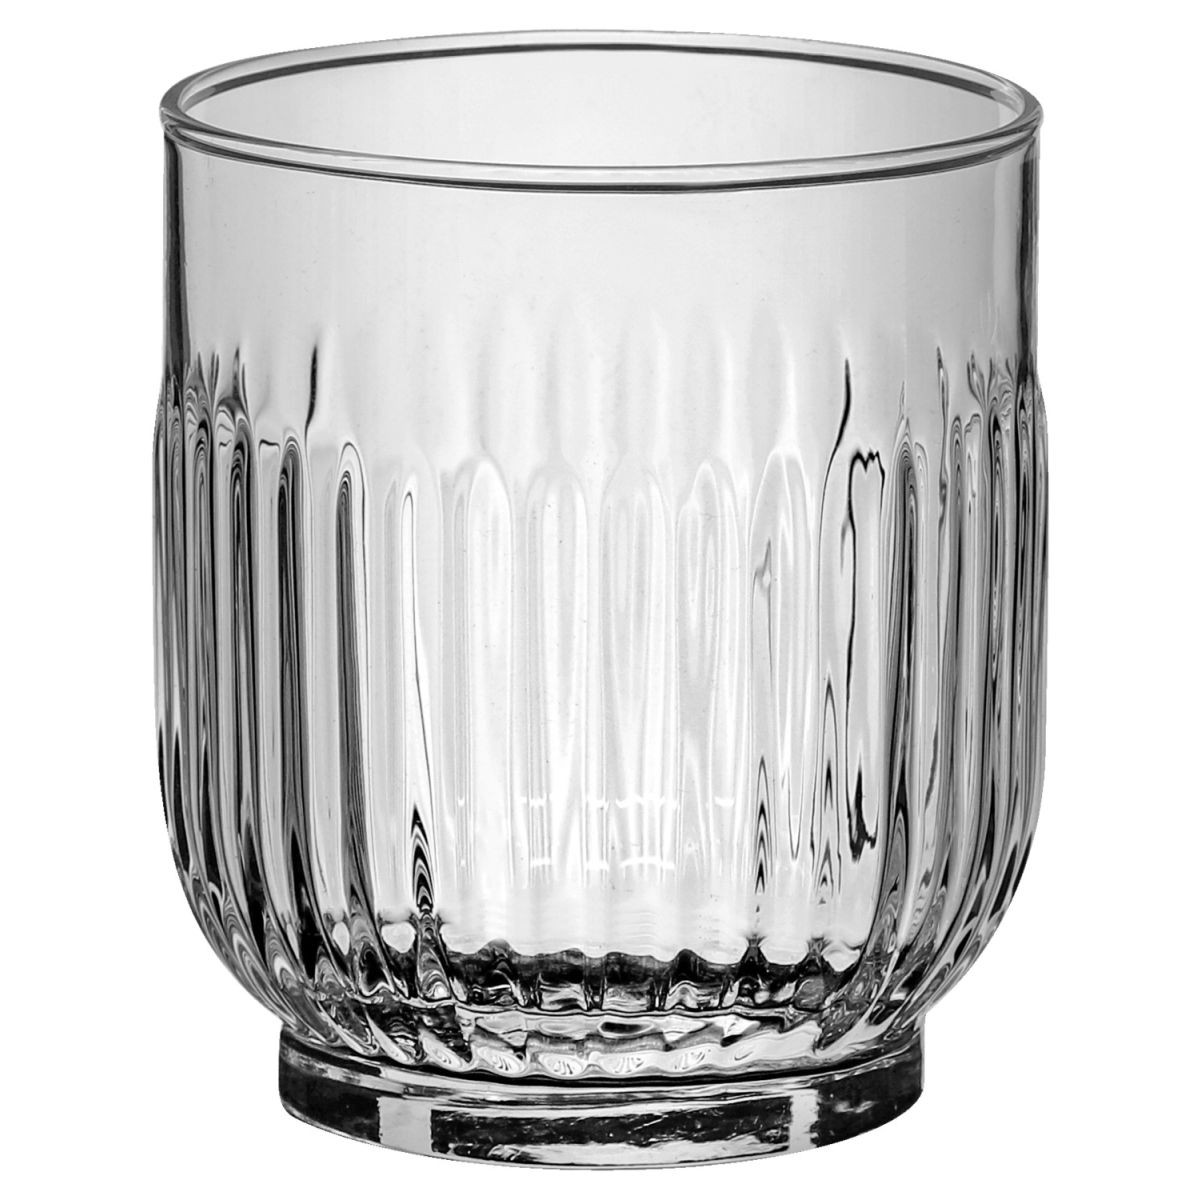 LAV Whiskyglas Tokyo; 330ml, 7.9x9 cm (ØxH); transparant; 6 stuk / verpakking